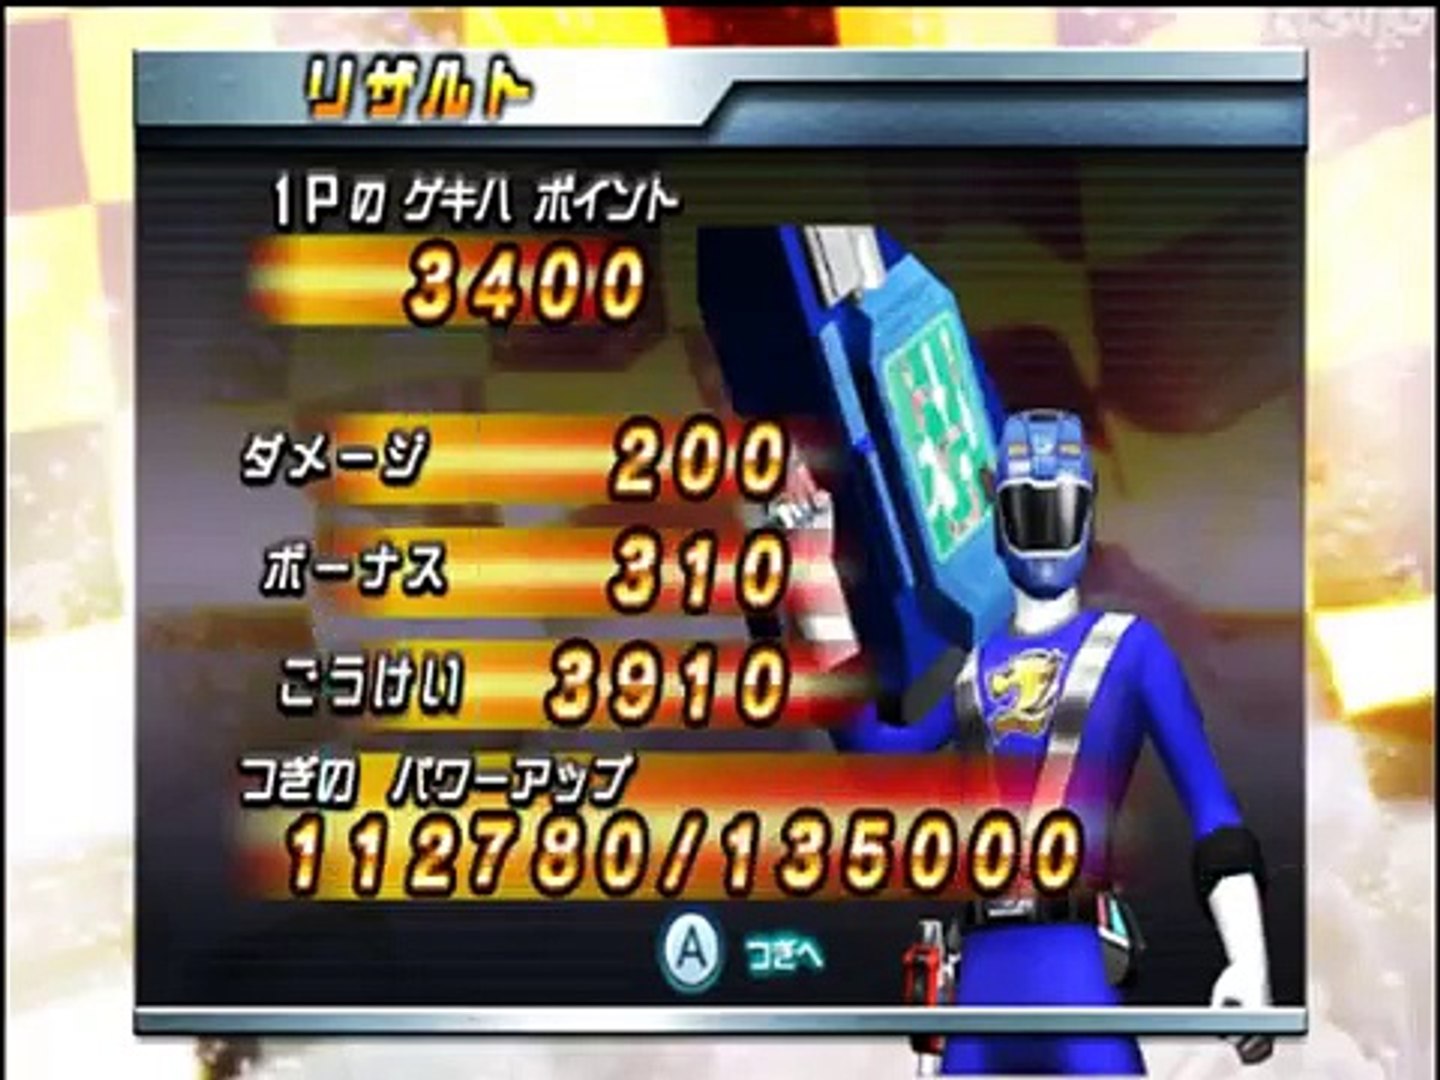 Super Sentai Battle Ranger Cross Wii Go Onger Compilation Hd Video Dailymotion